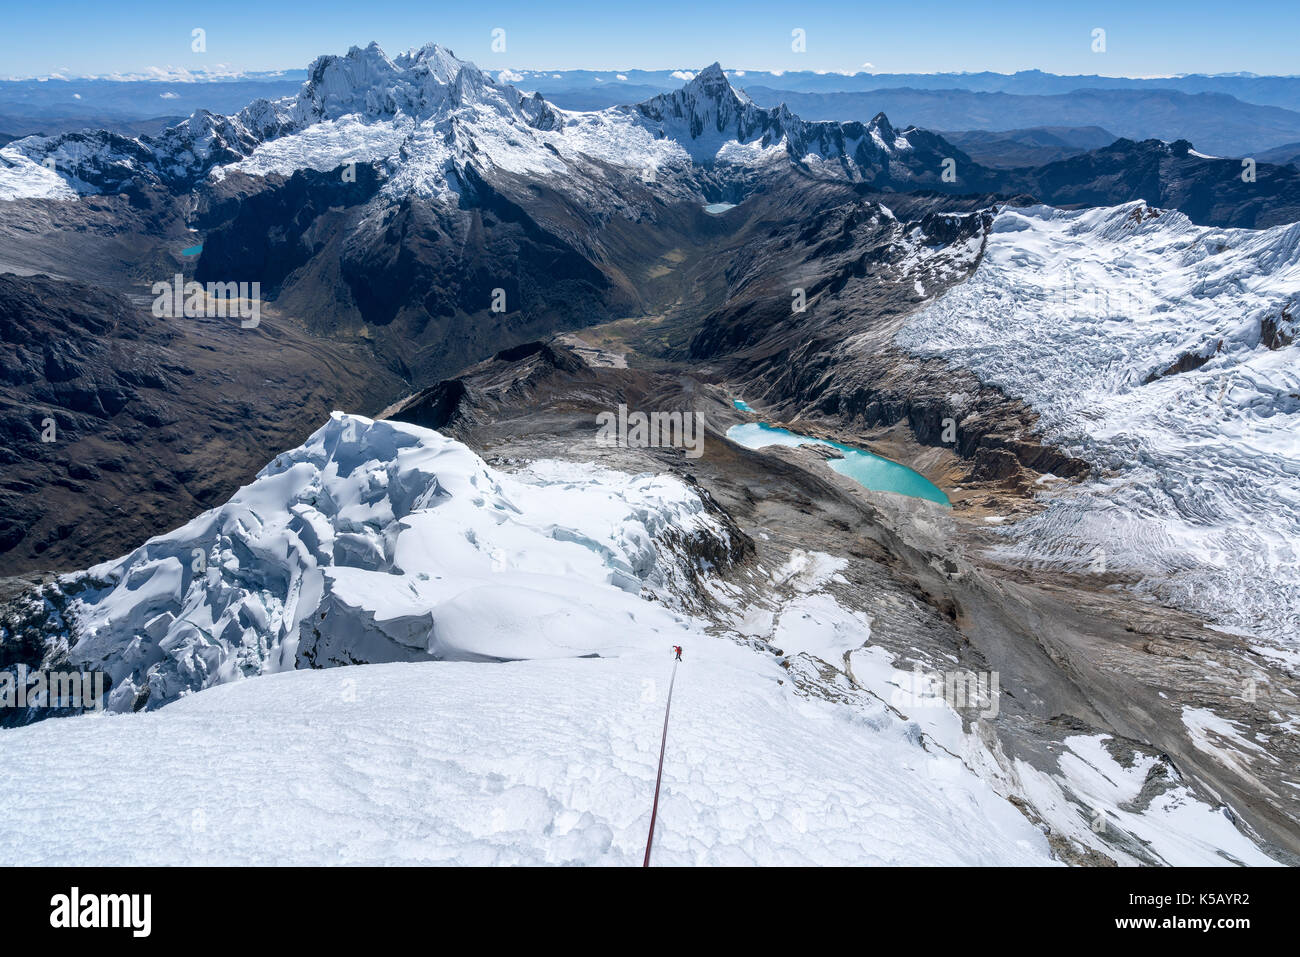 Mountain climbing on the Artesonraju, Santa Cruz valley, Cordillera Blanca, Peru Stock Photo